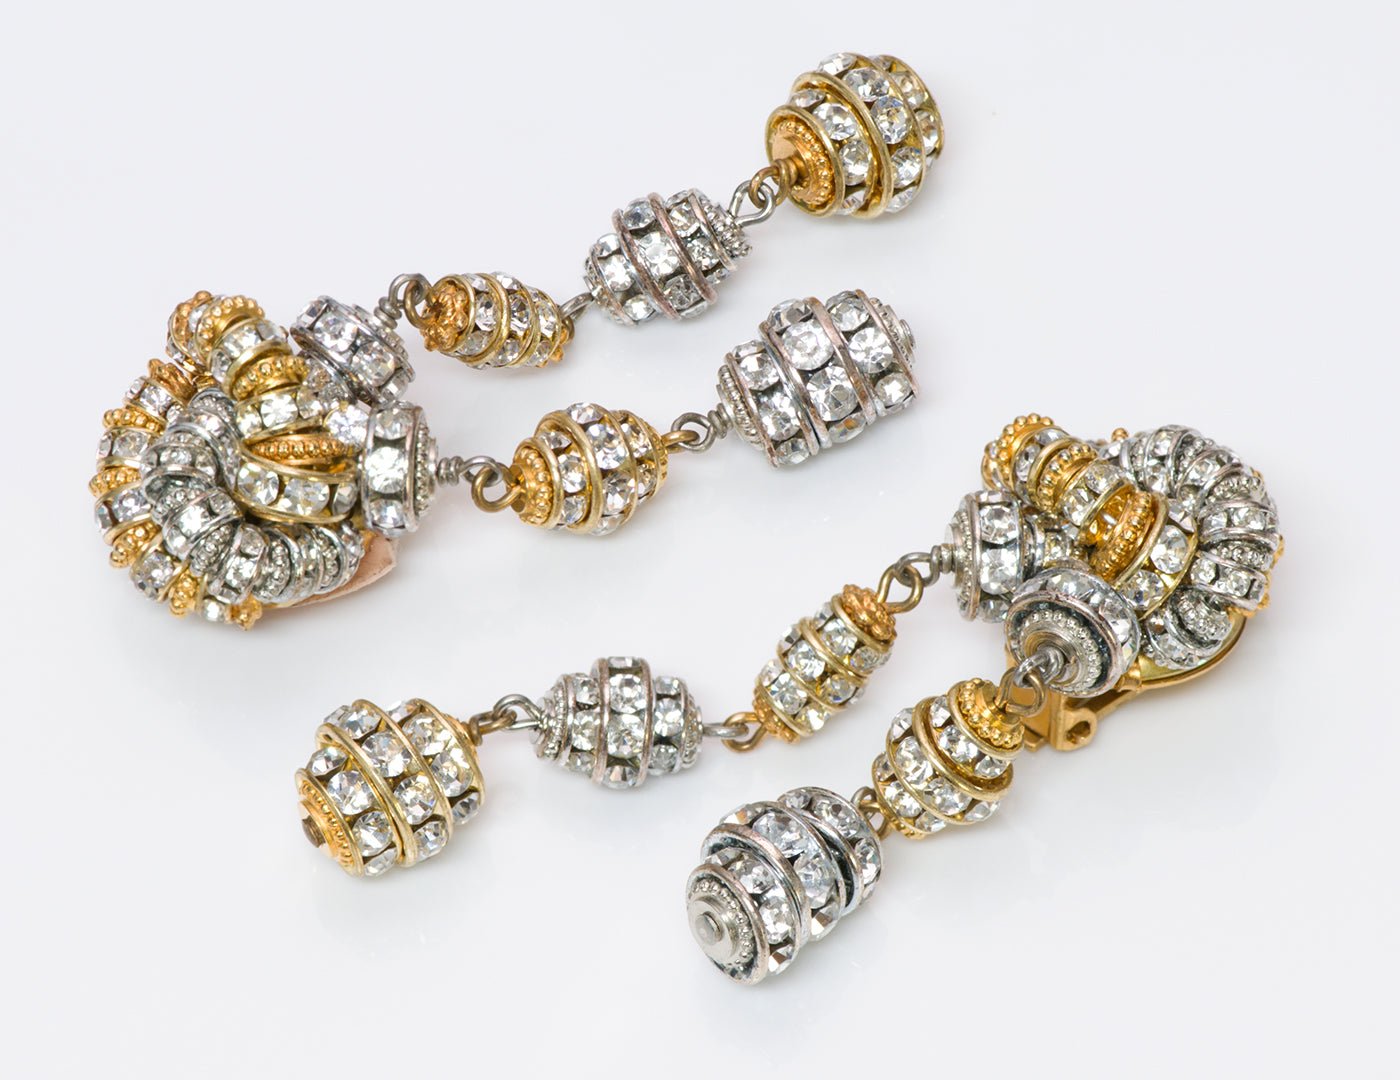 Francoise Montague 1950’s Crystal Earrings